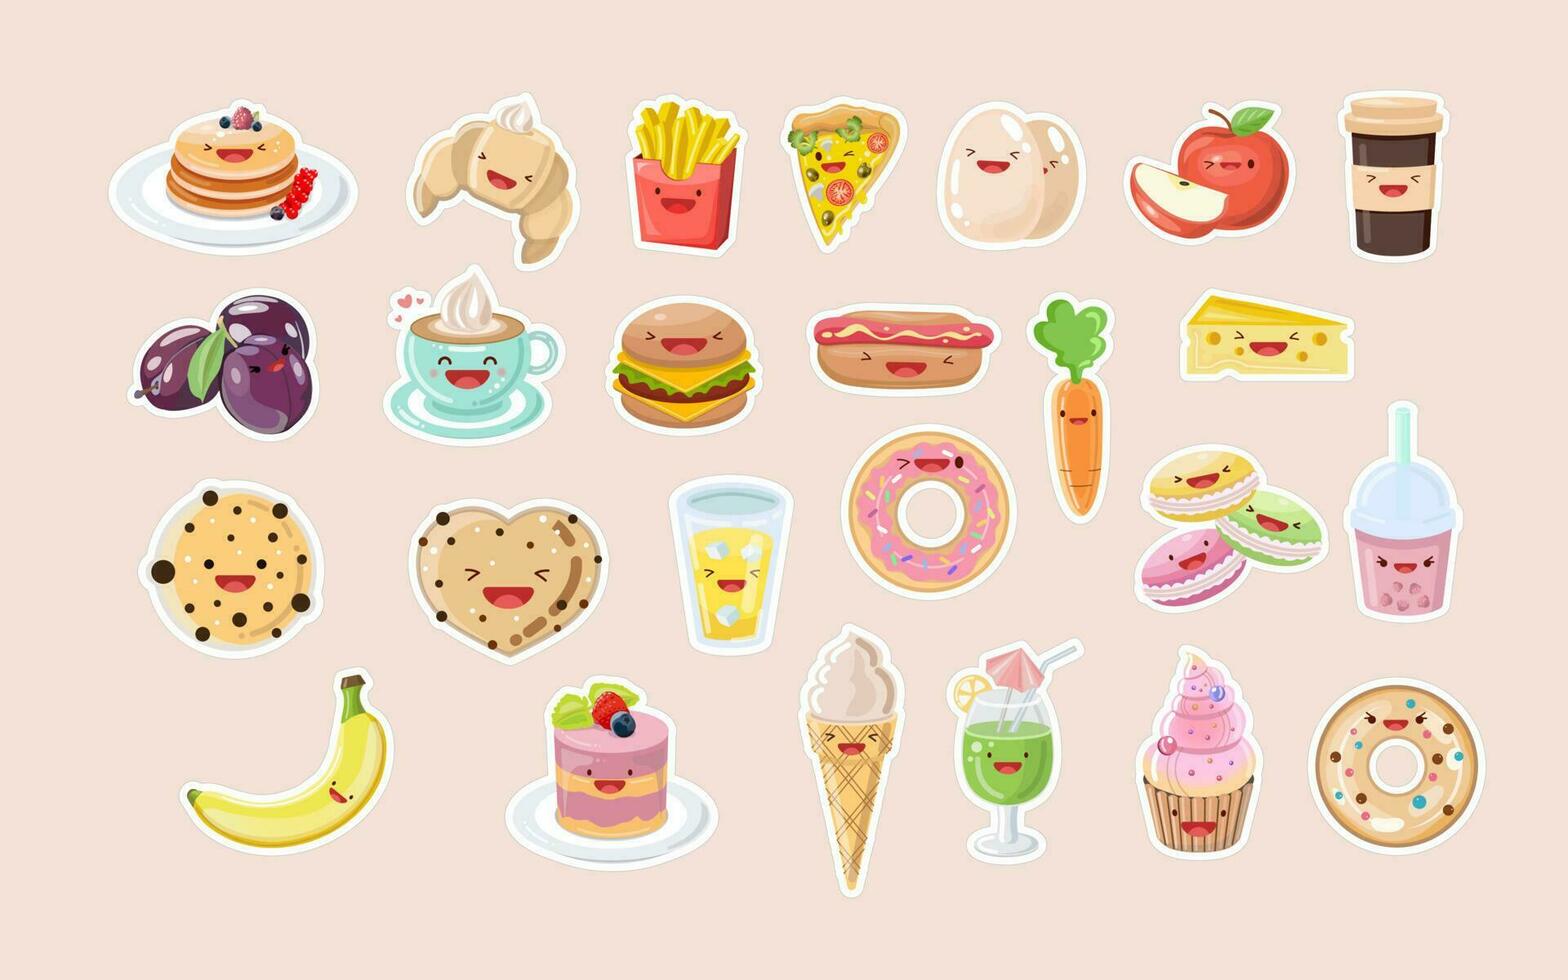 fofa Comida adesivo definir. Comida kawaii adesivo conjunto dentro desenho animado estilo. bebidas, velozes comida, fruta, vegetais, sobremesas. vetor